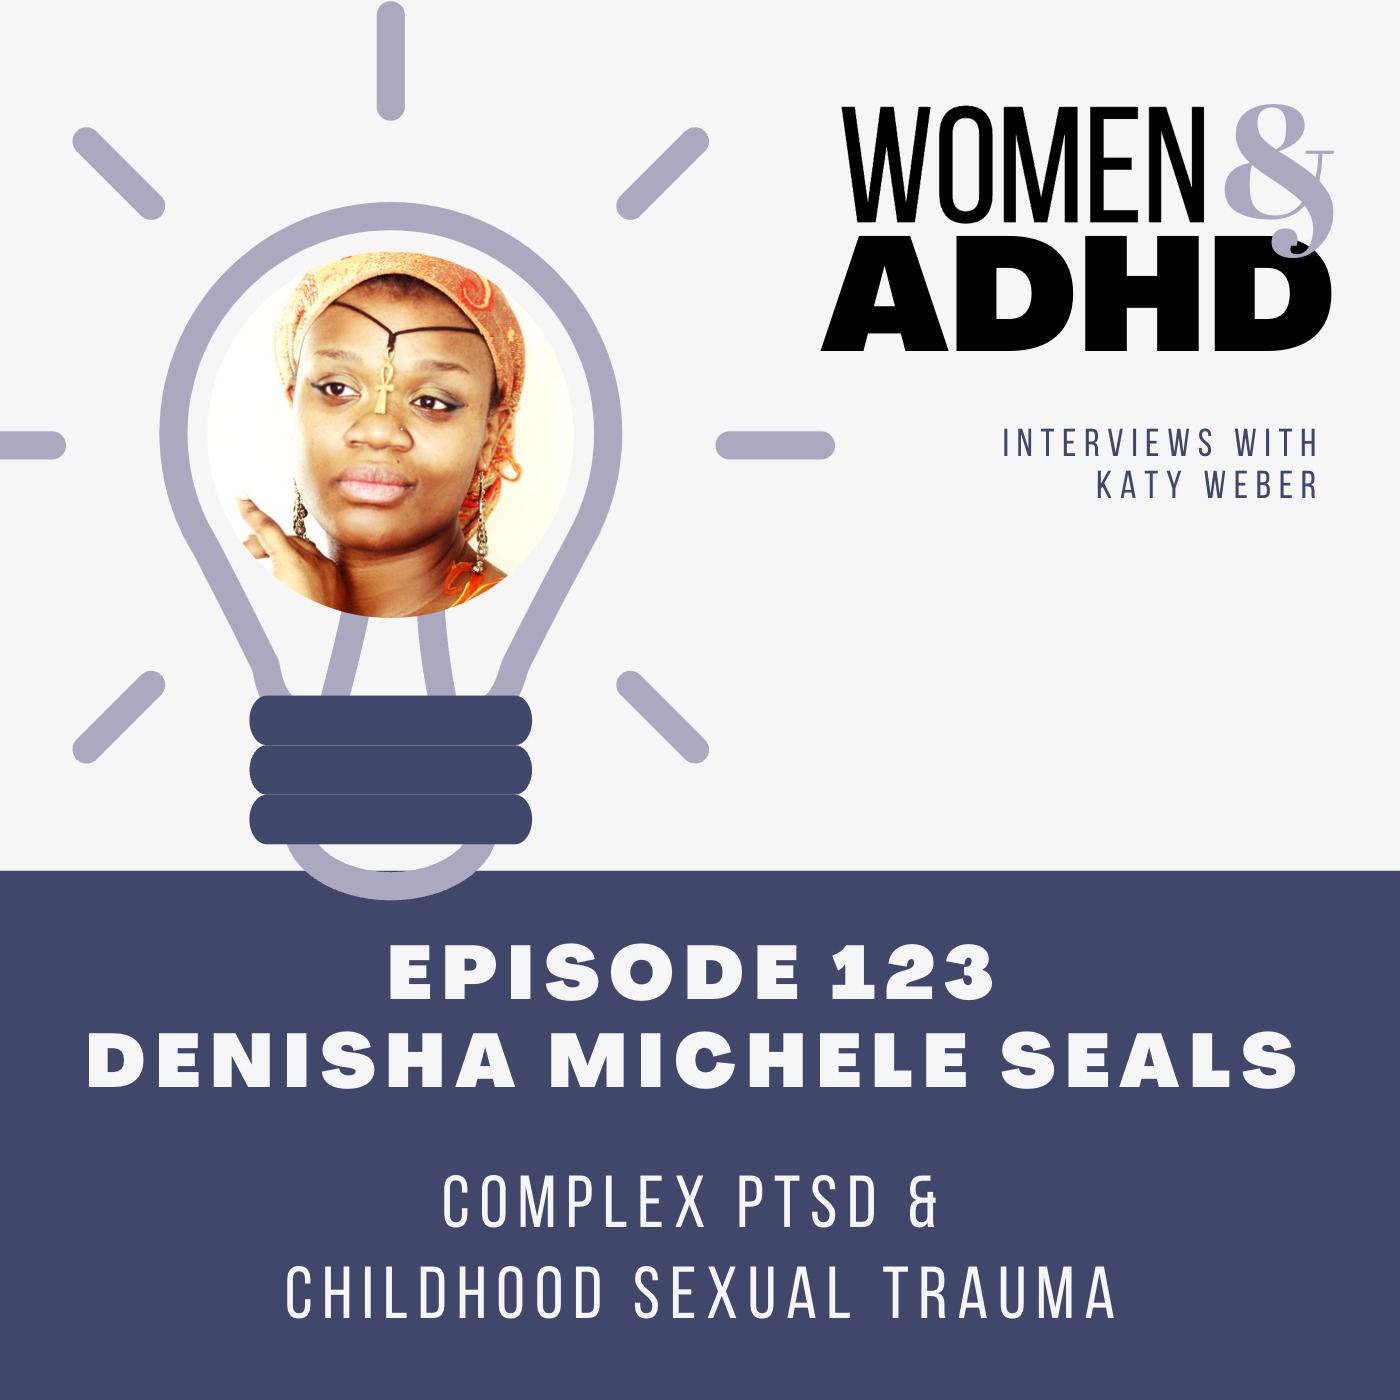 Denisha Michele Seals: Complex PTSD and childhood sexual trauma